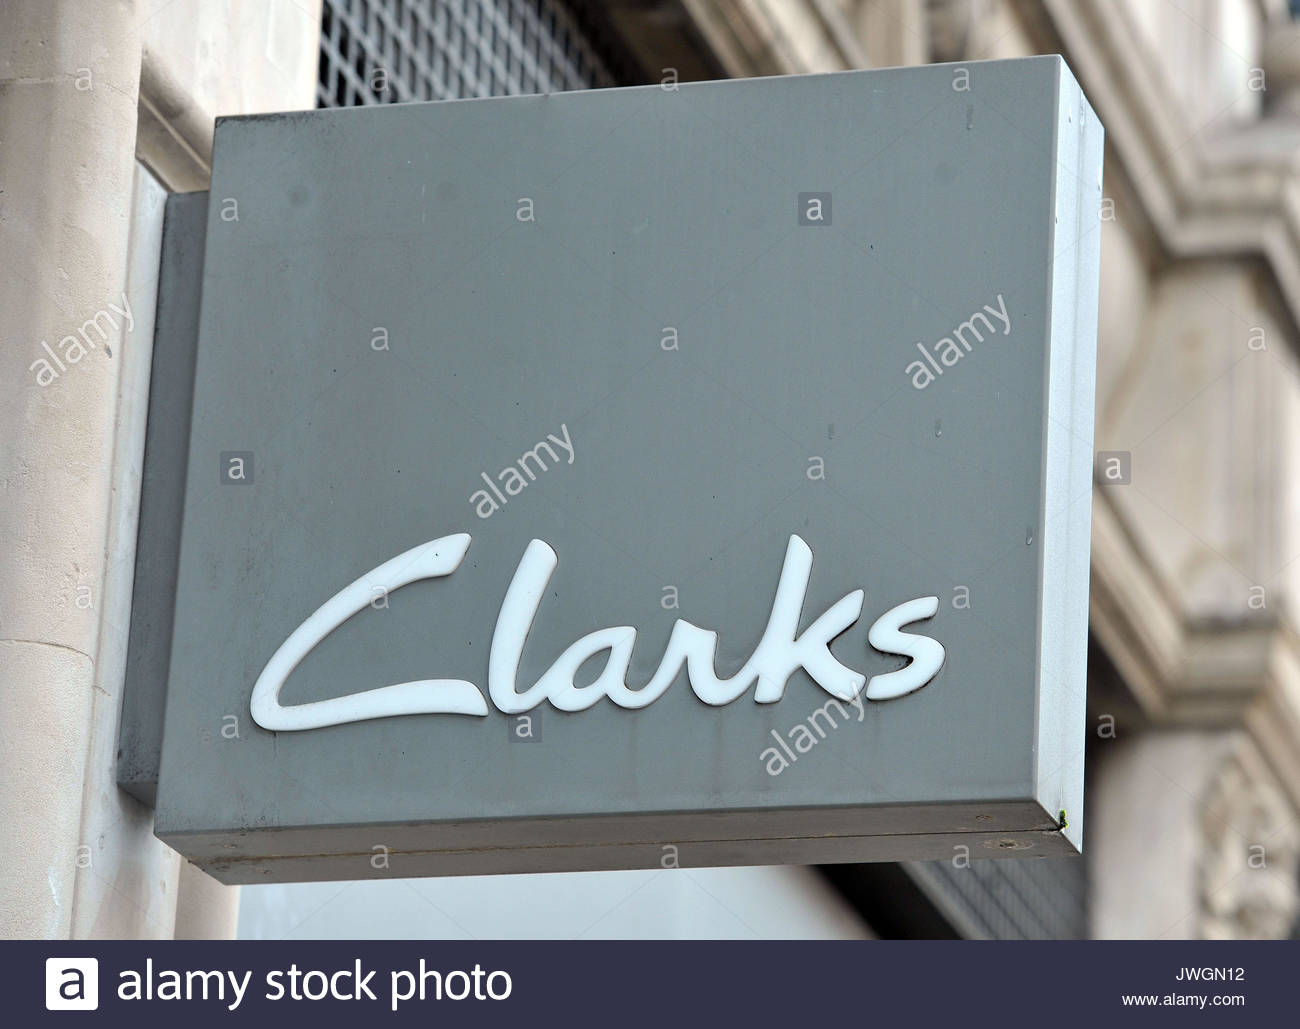 clarks central london off 66% - online 